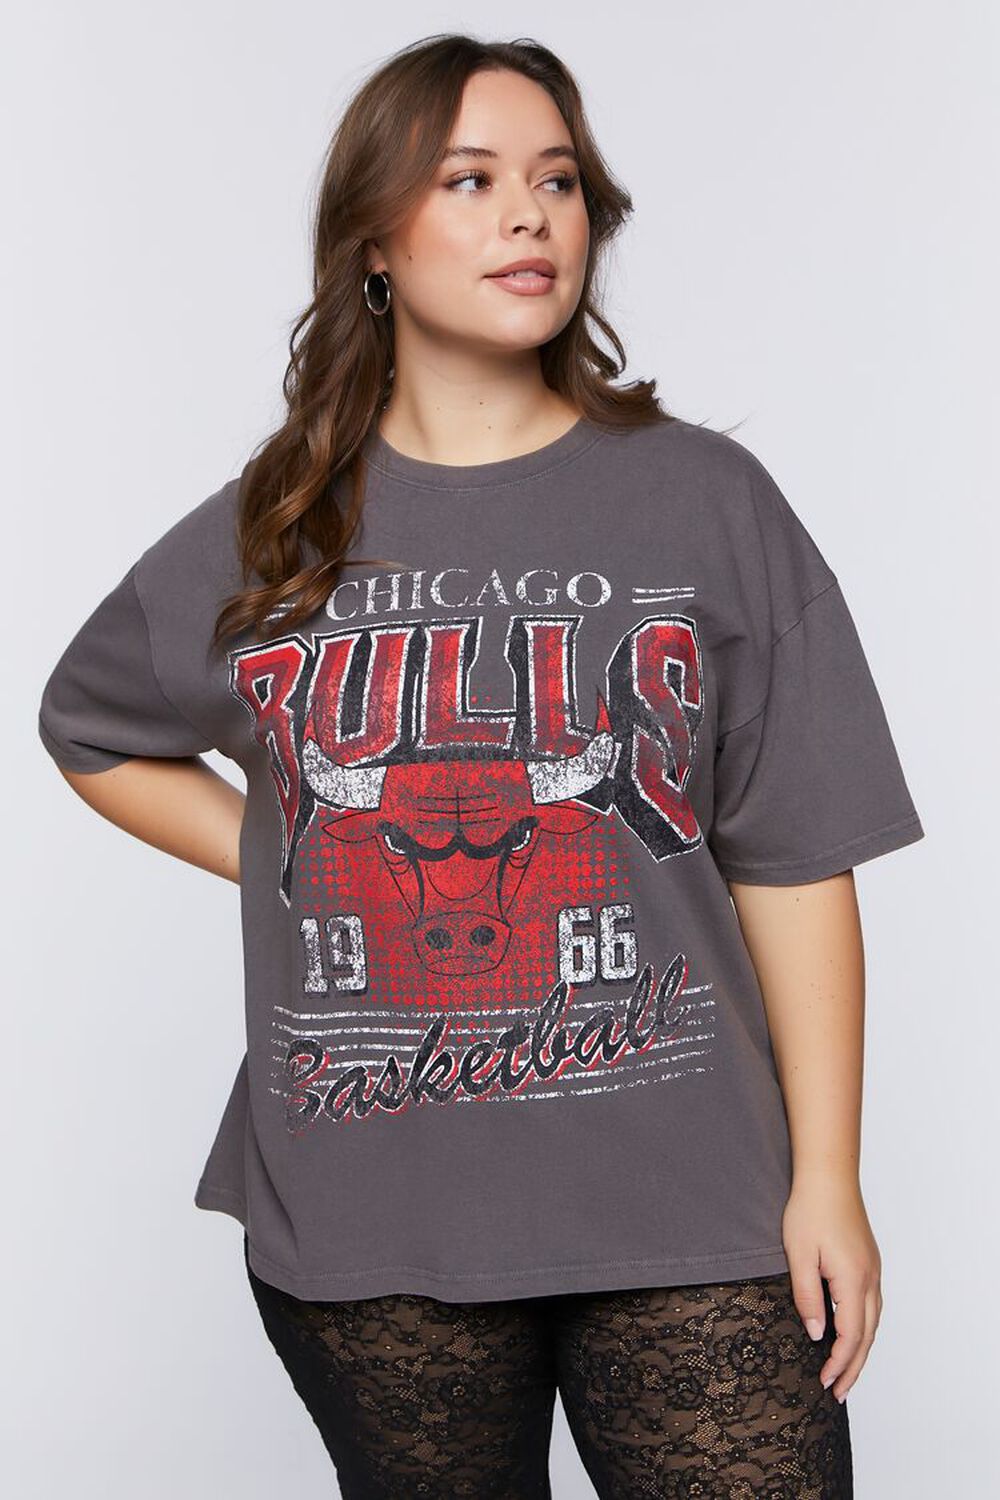 chicago bulls shirt women's